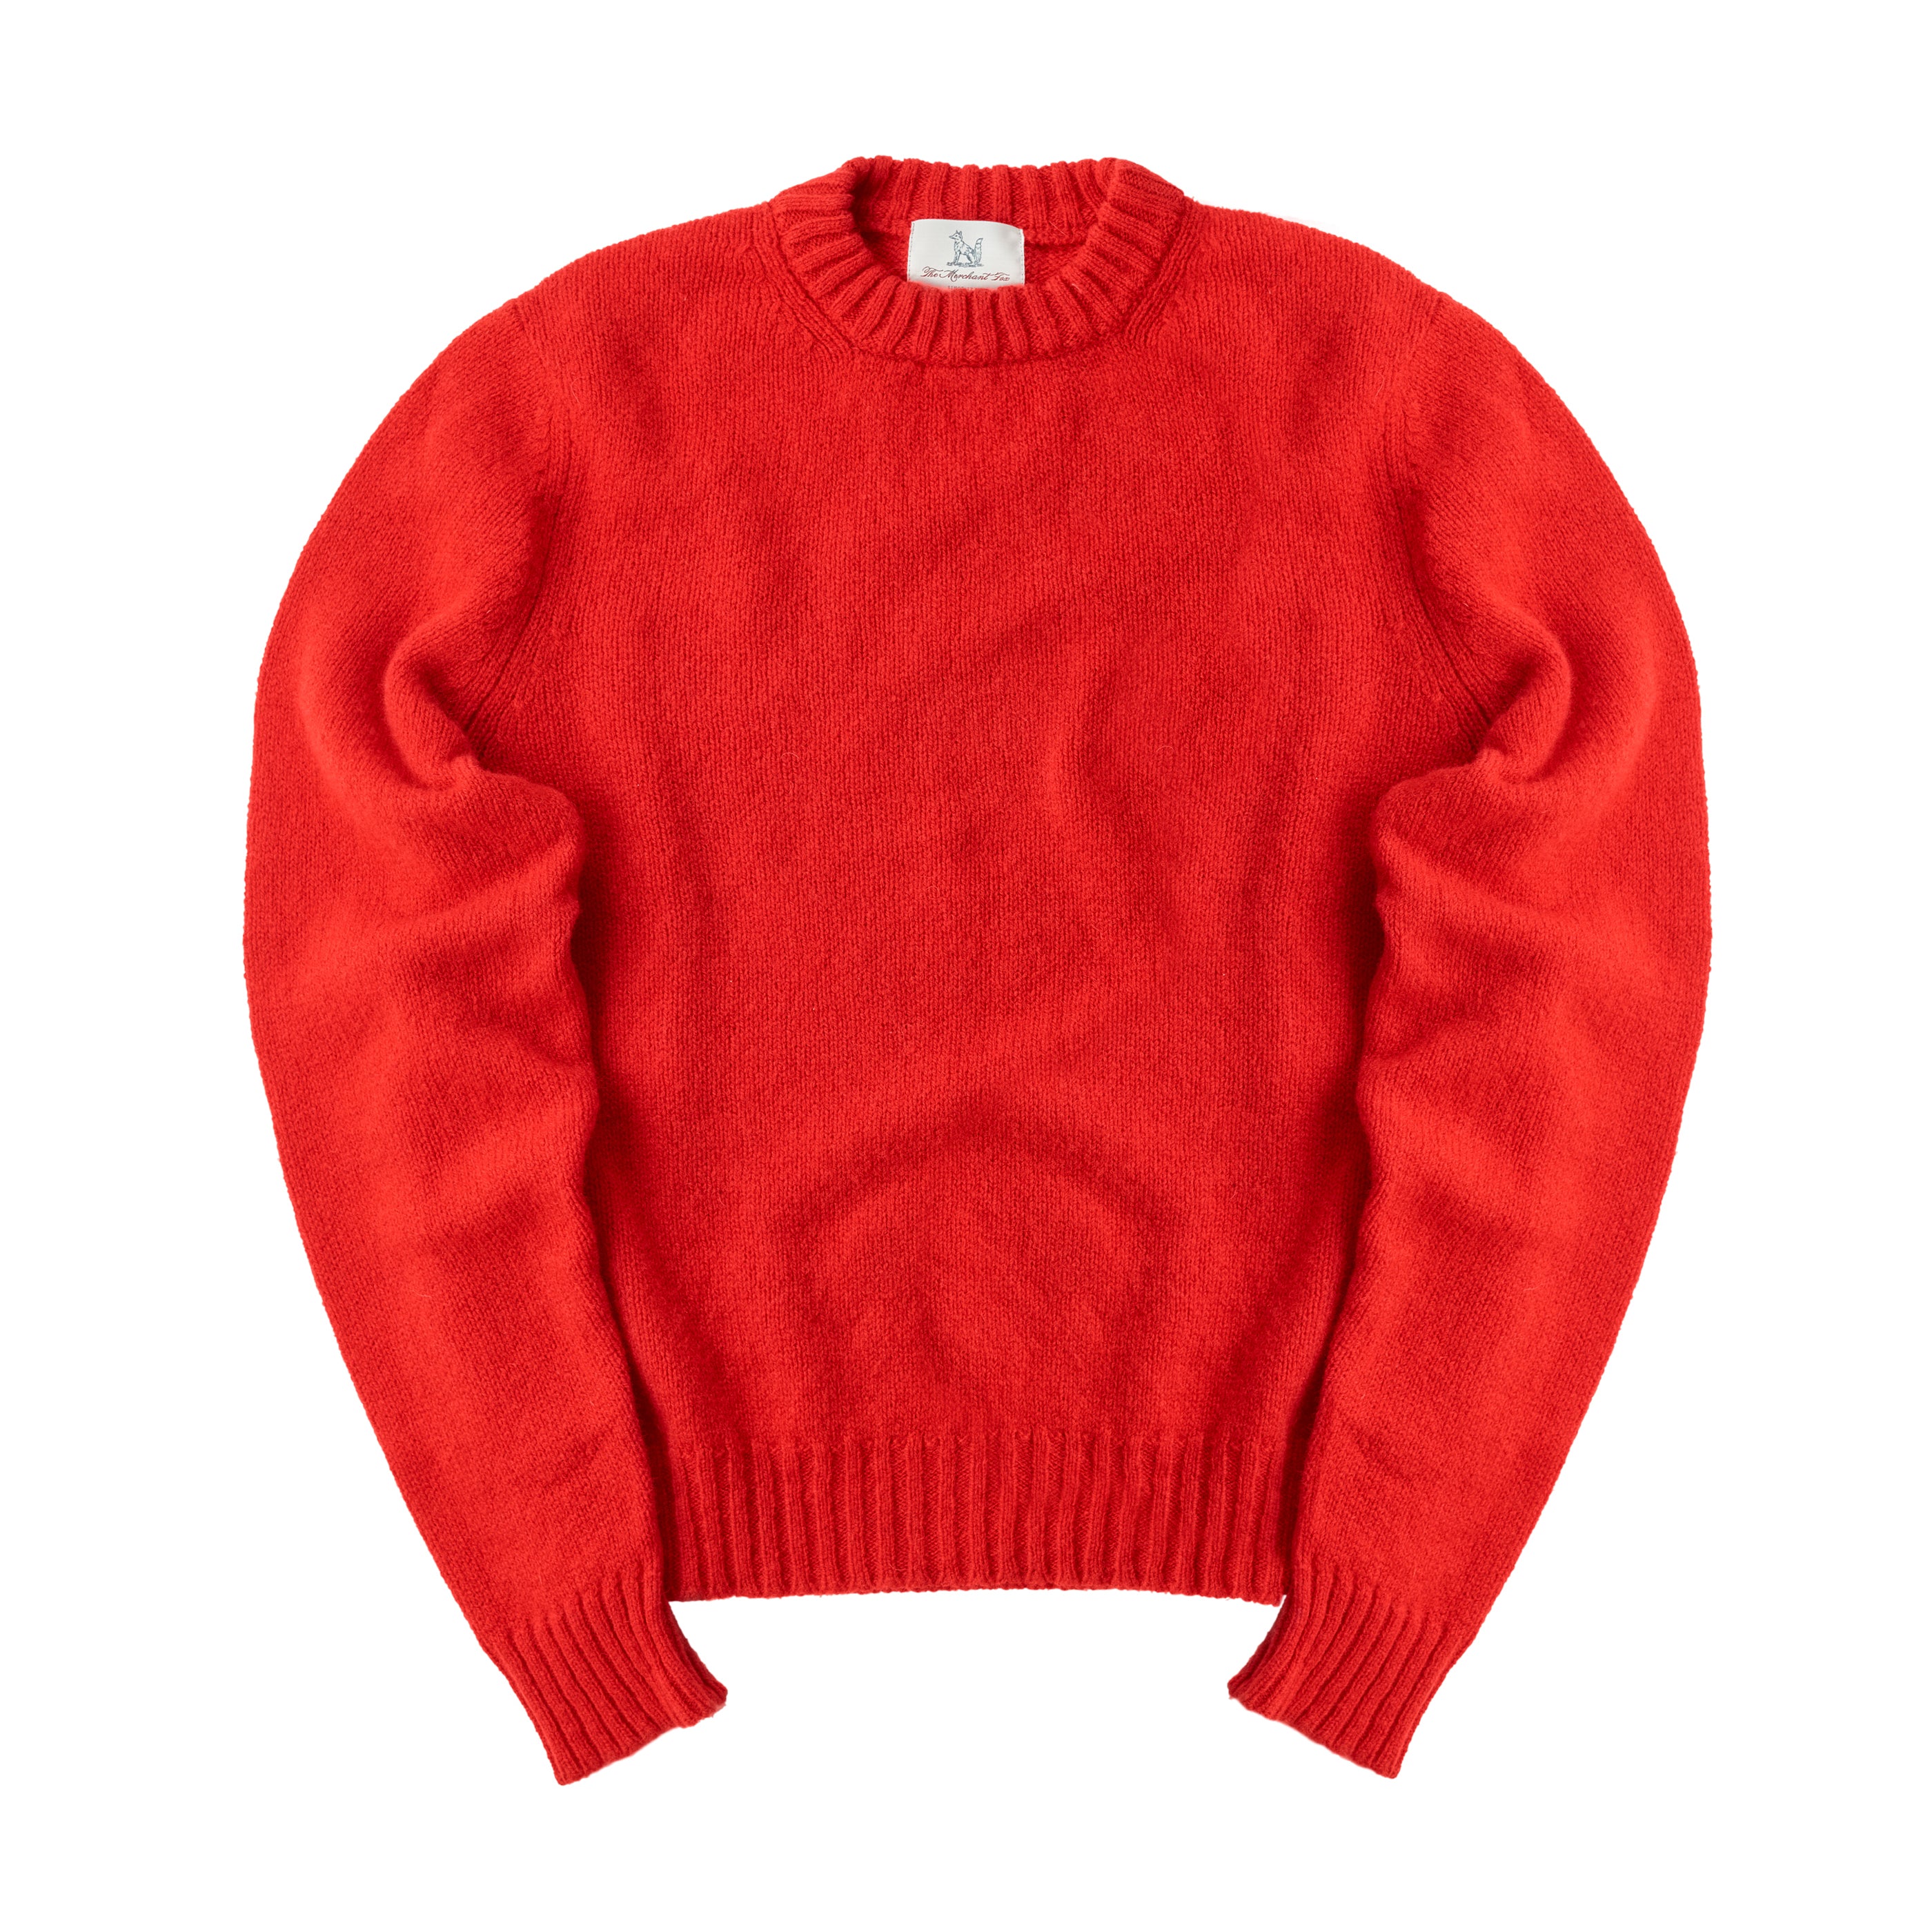 The Berry Red Crew Neck Woollen Sweater